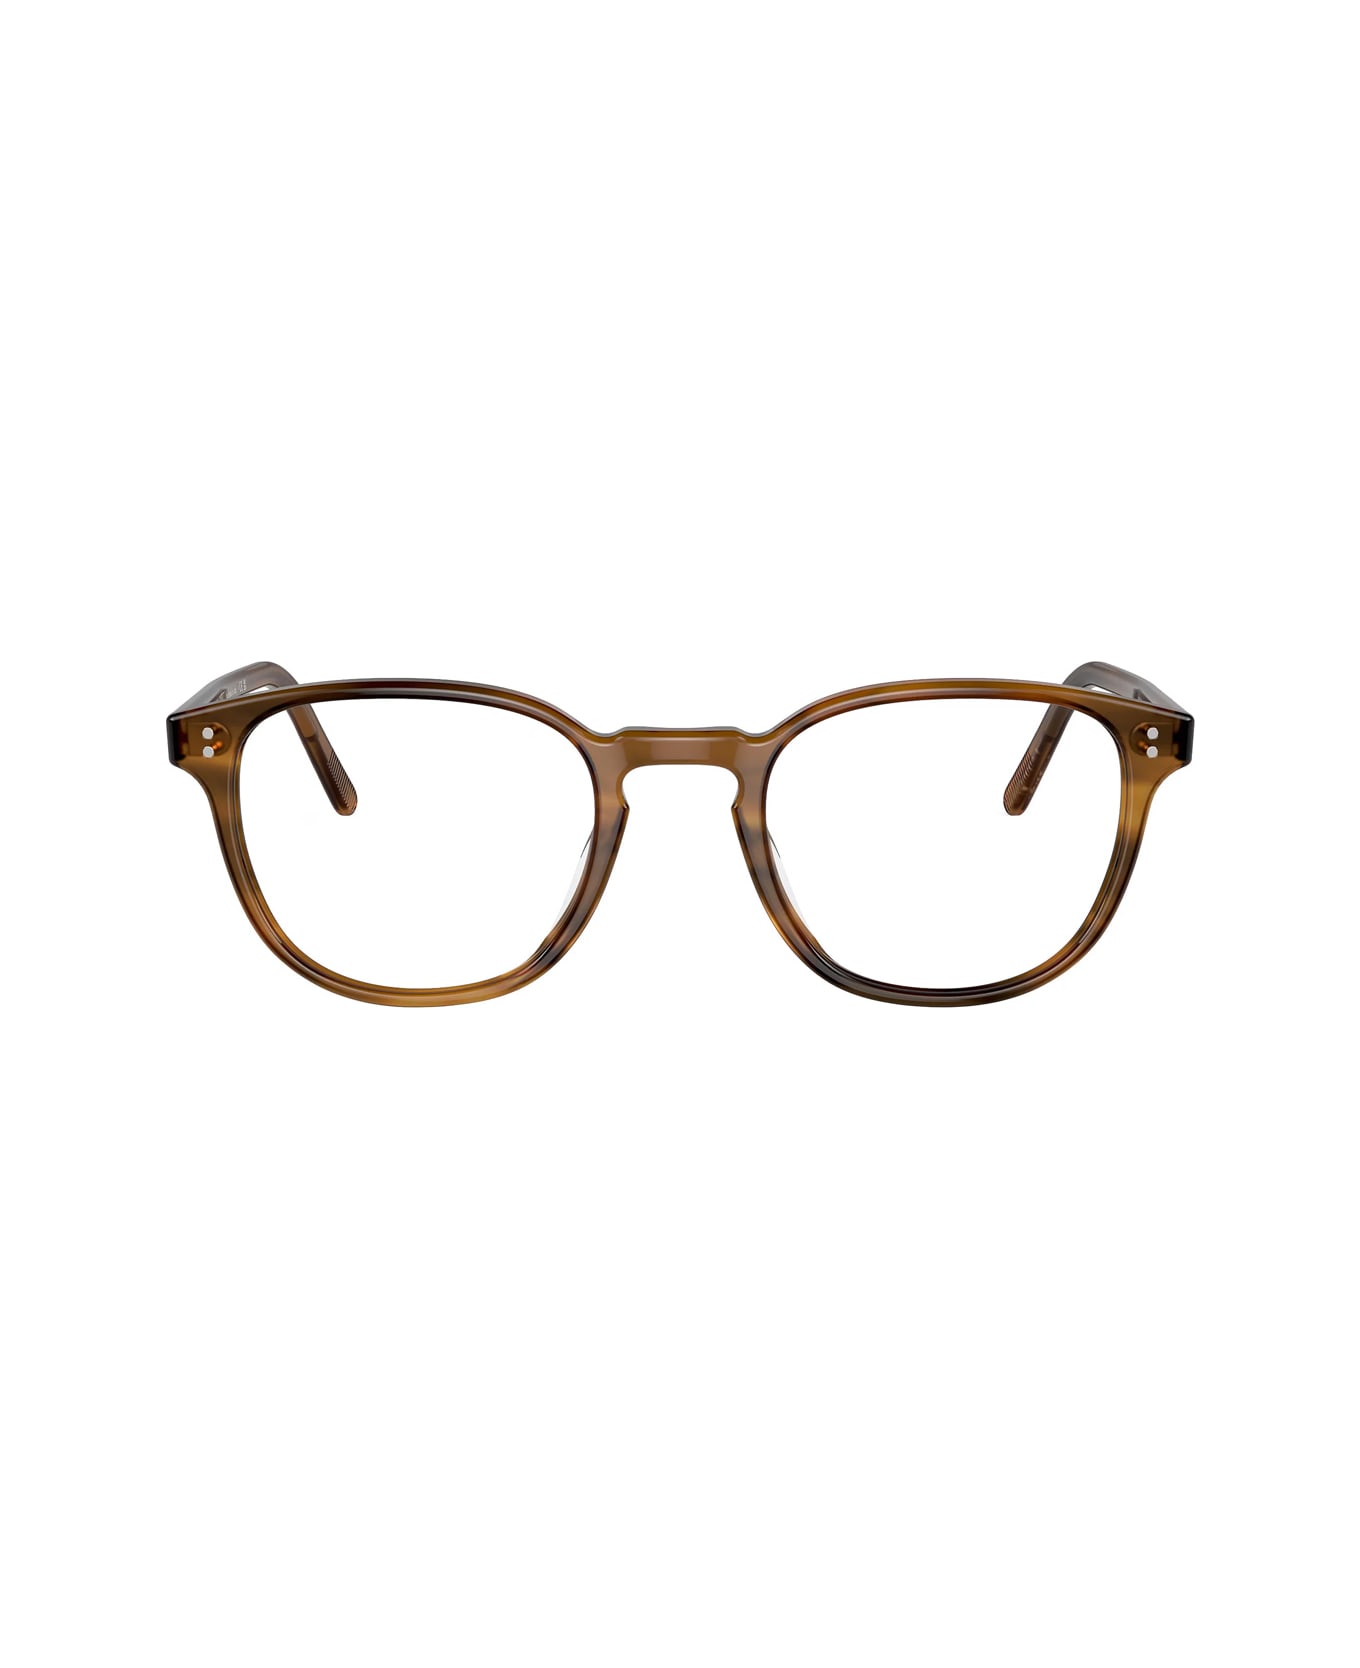 Oliver Peoples Ov5219 - Fairmont 1011 Glasses - Marrone